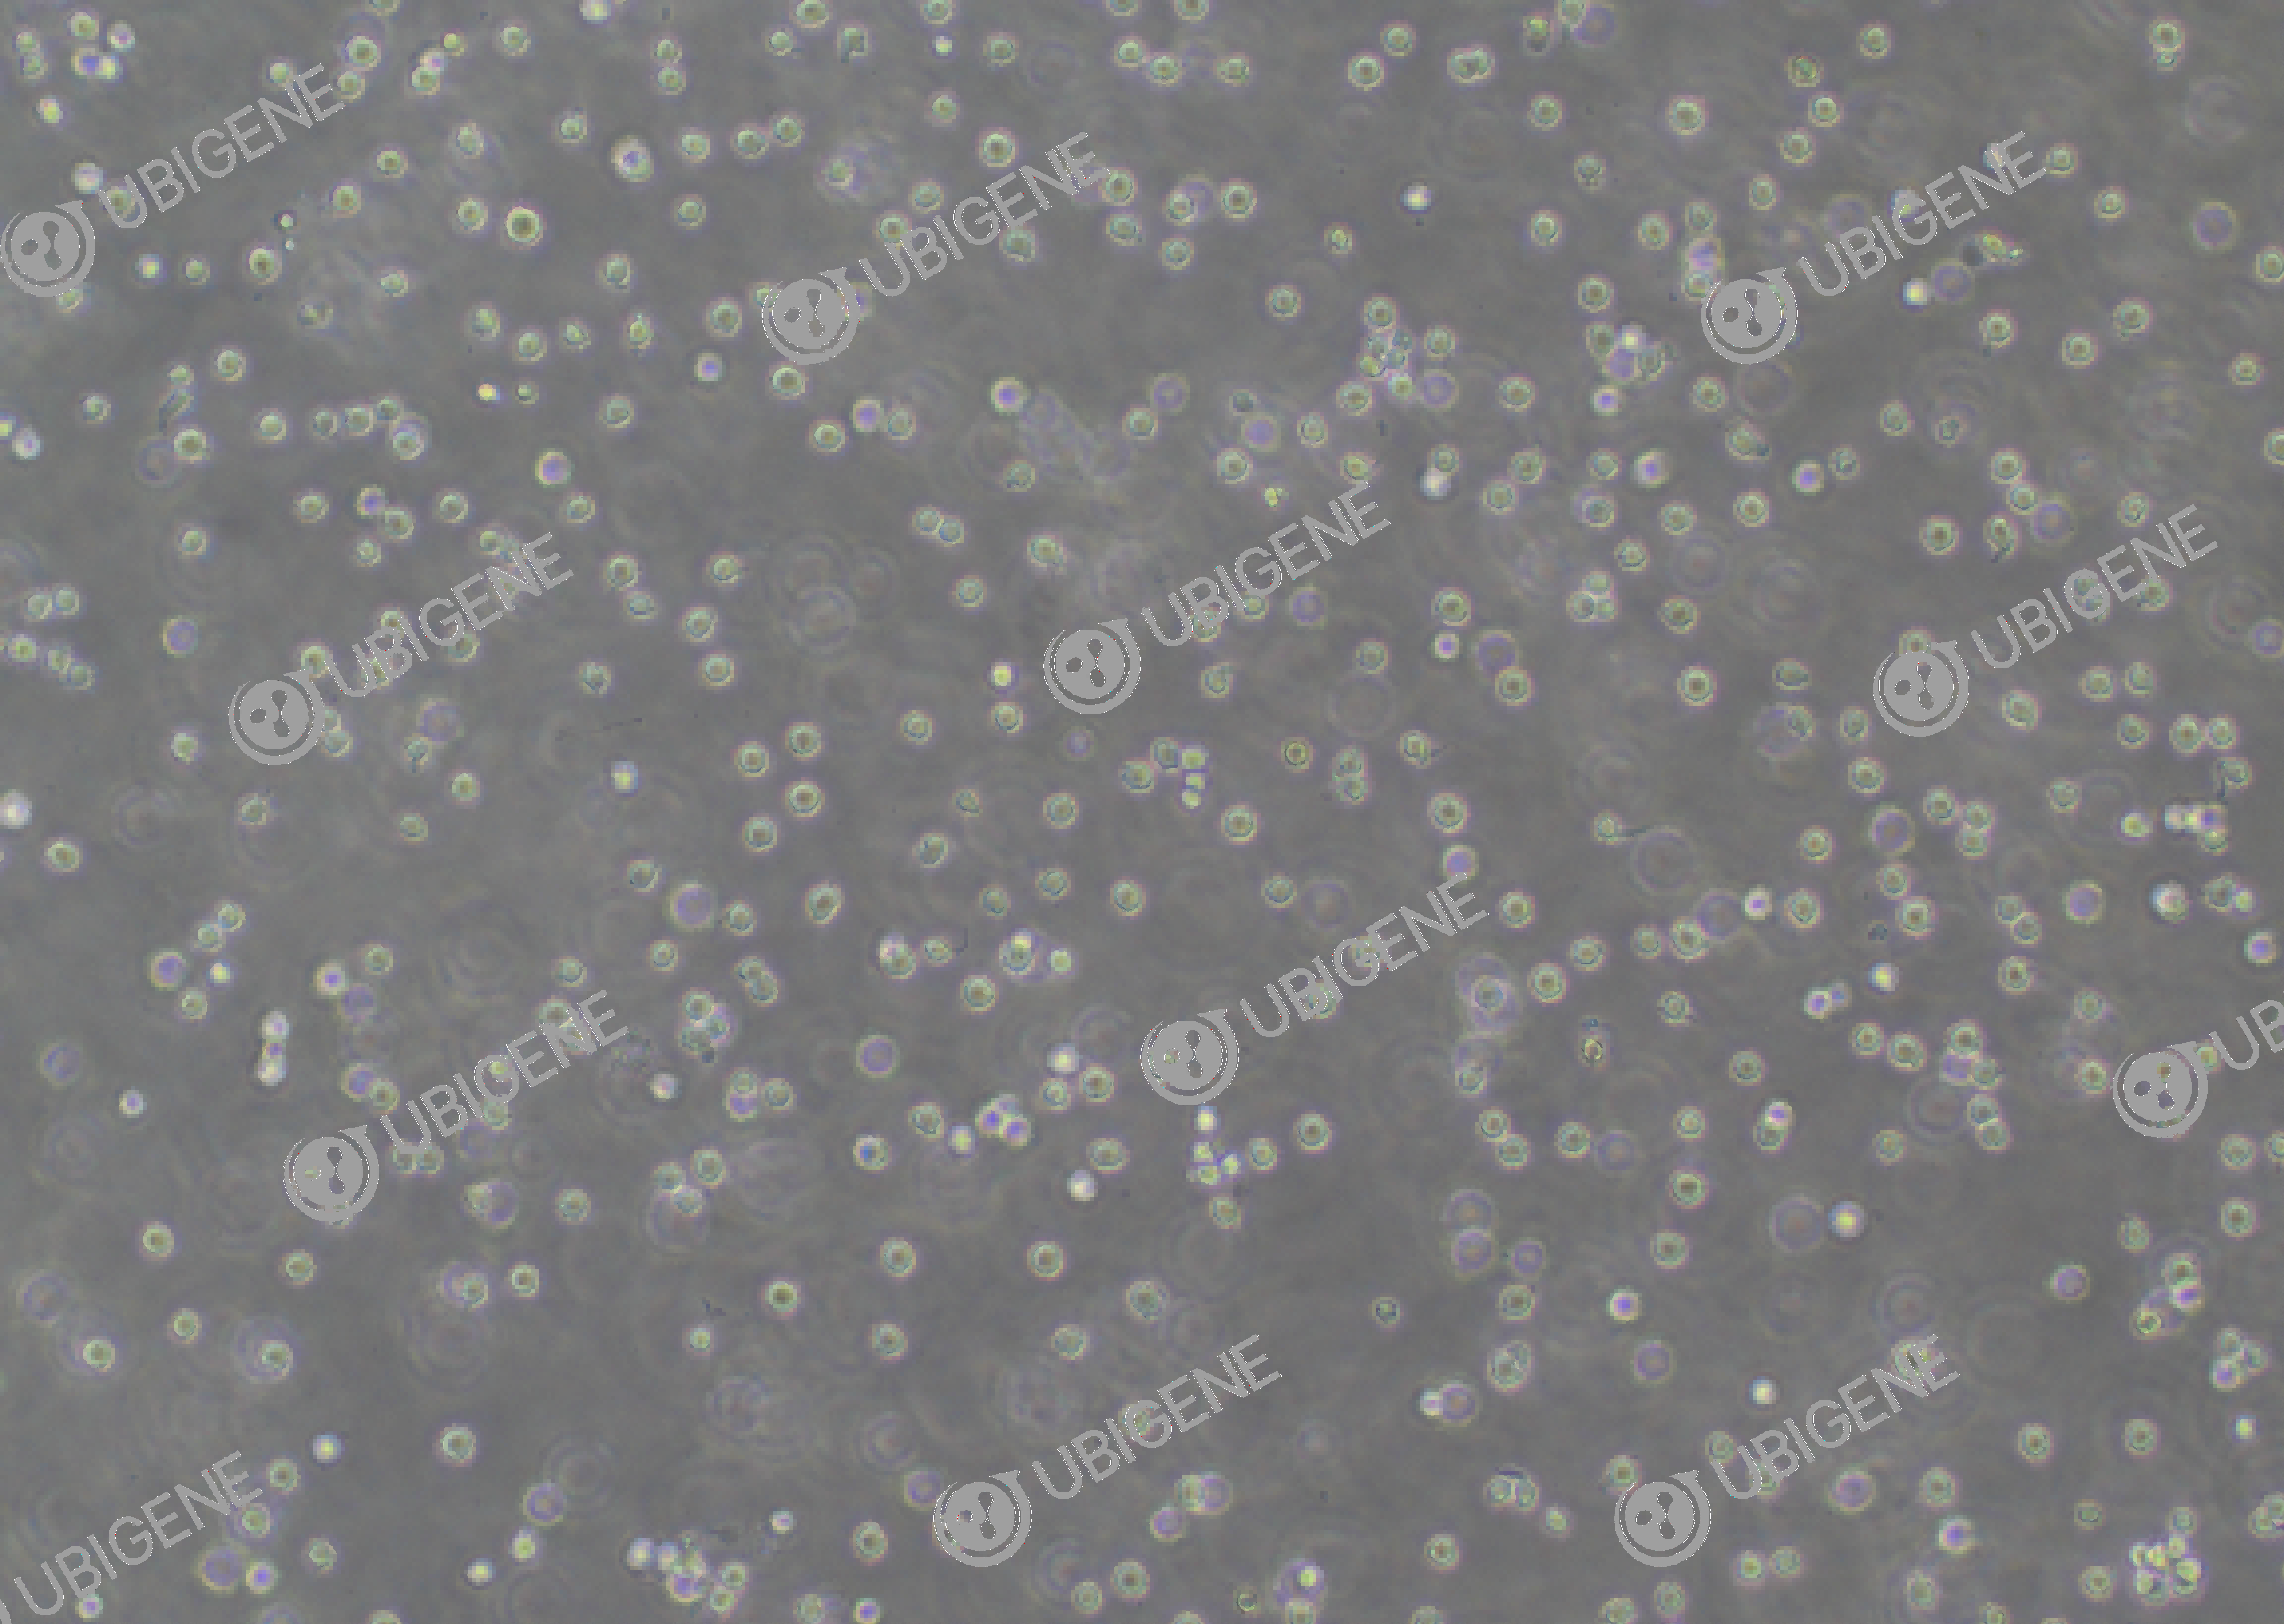 MV4-11 cell line Cultured cell morphology